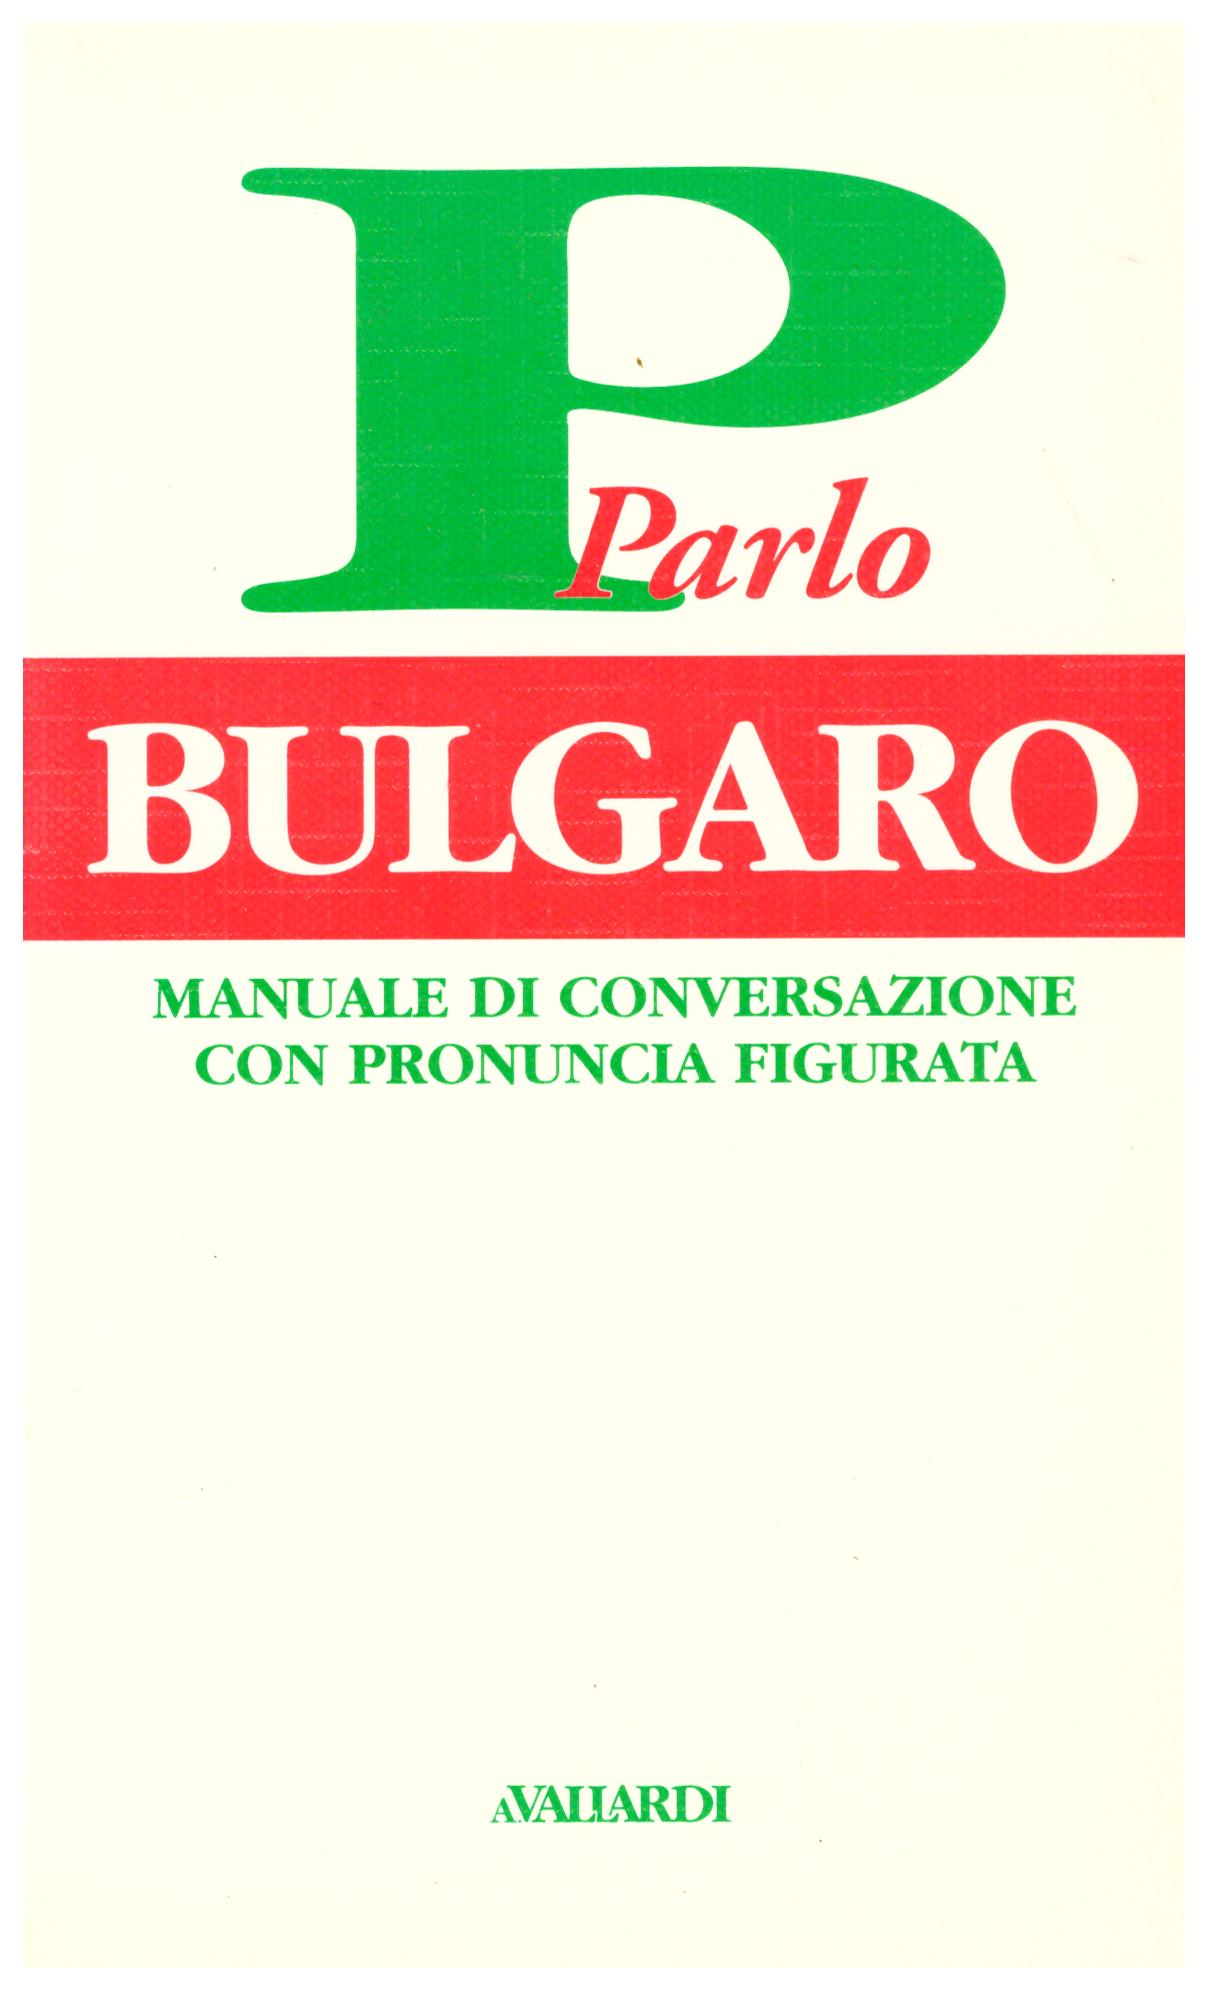 Titolo: Parlo Bulgaro Autore: AA.VV.  Editore: avaliardi, 2000